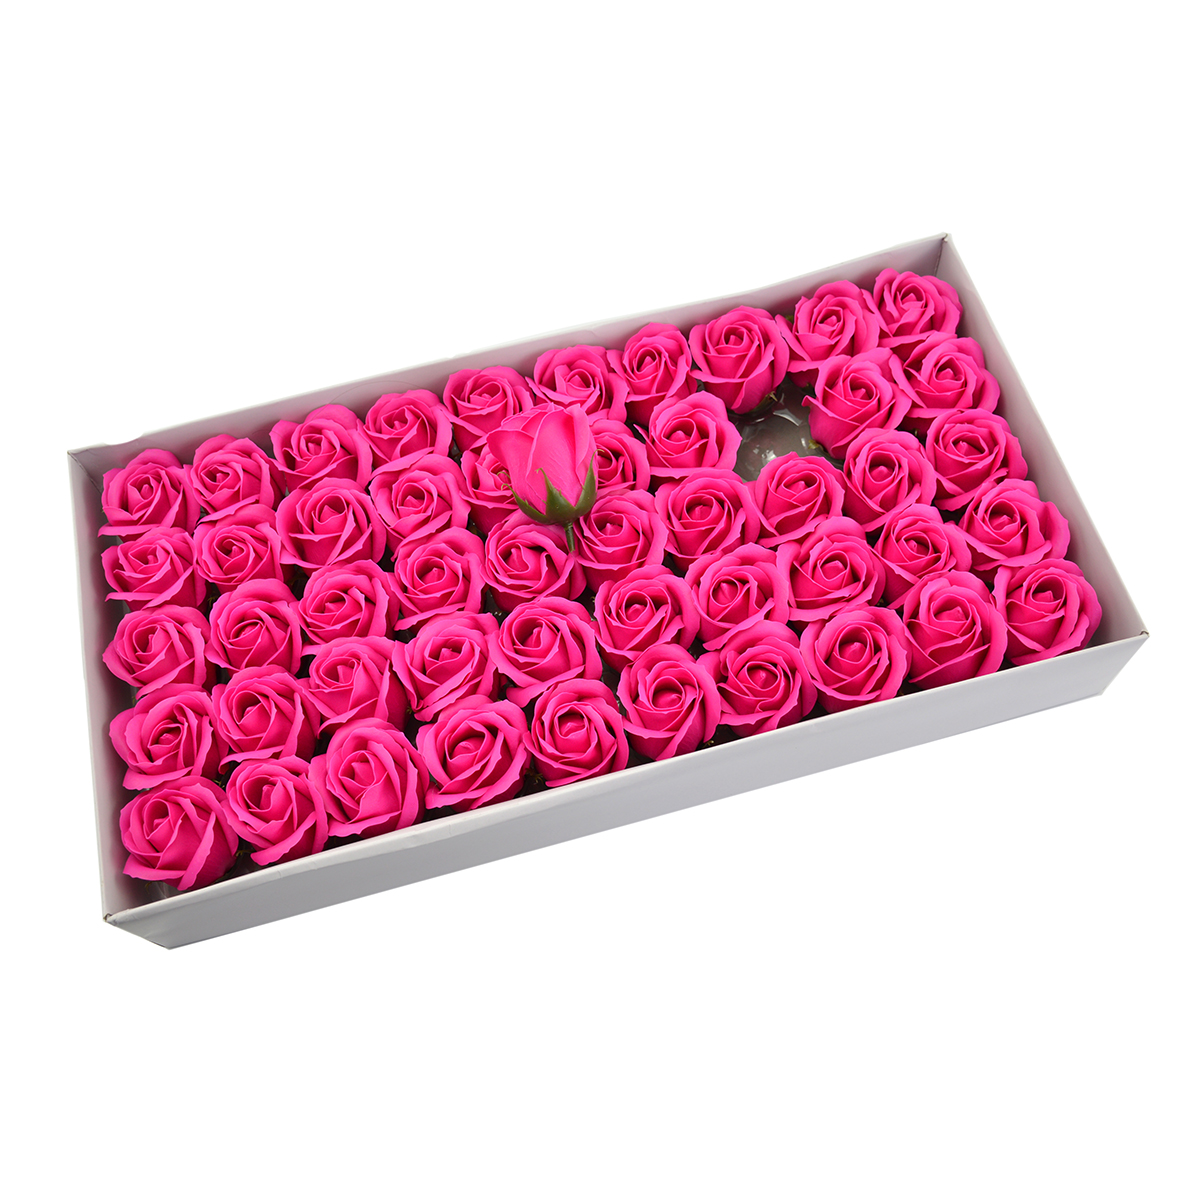 Juego de 50 rosas de jabón aromáticas, toque real, rosa intenso